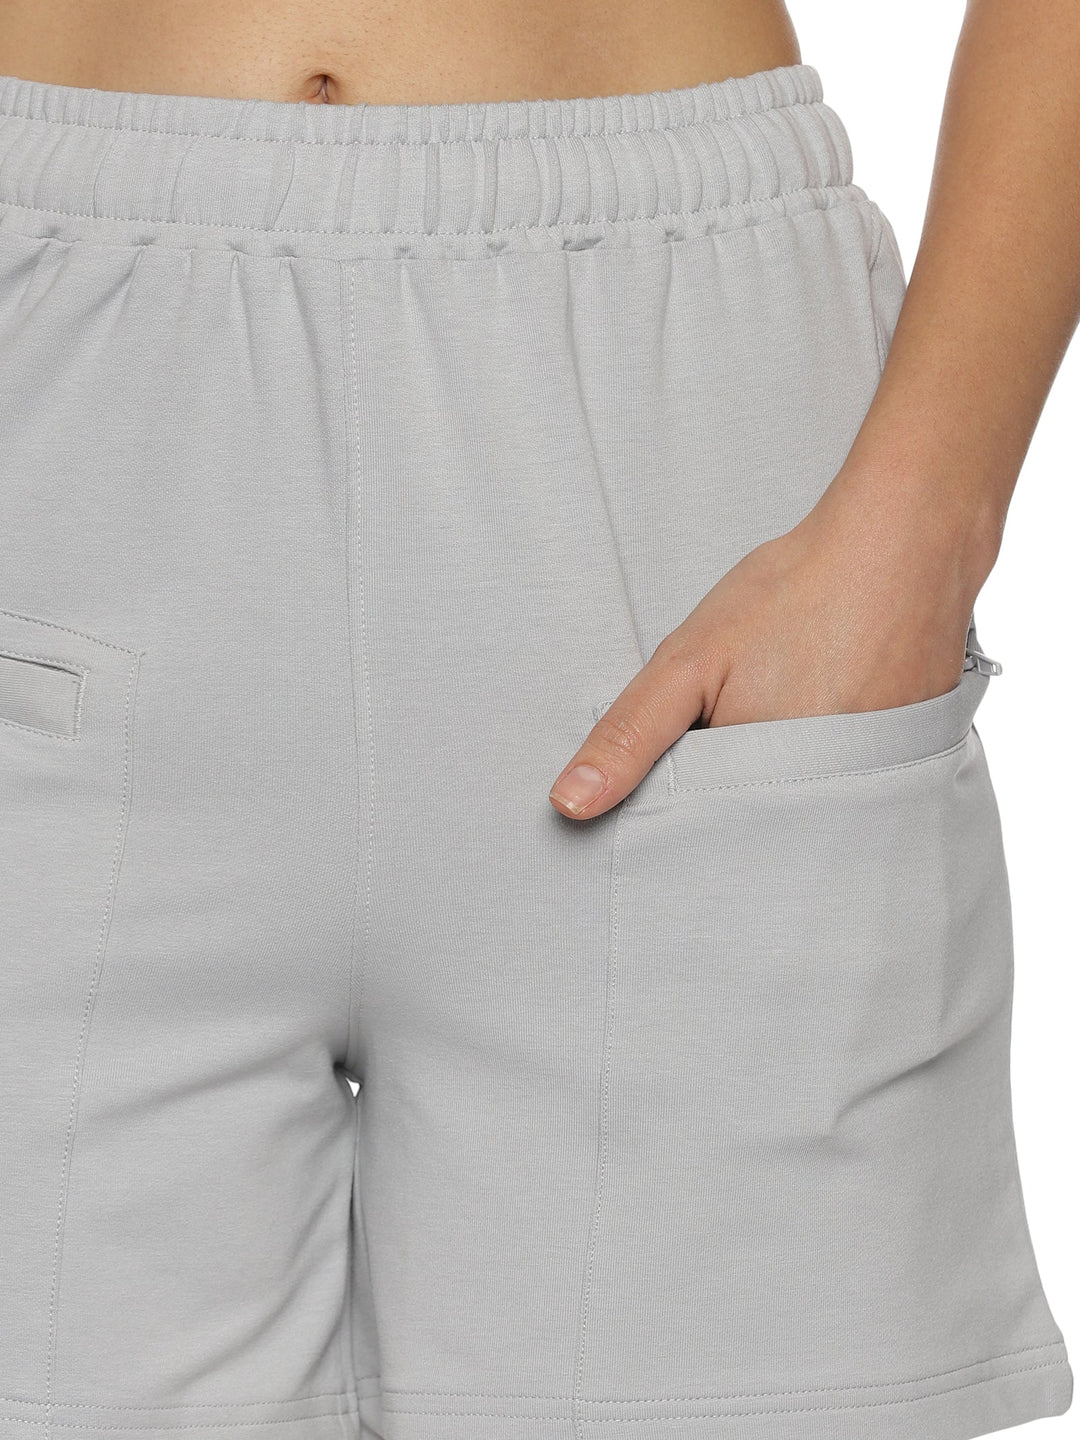 Women's Solid Training Shorts With Elasticated Drawstring Waist & Zipper Pockets (Grey)